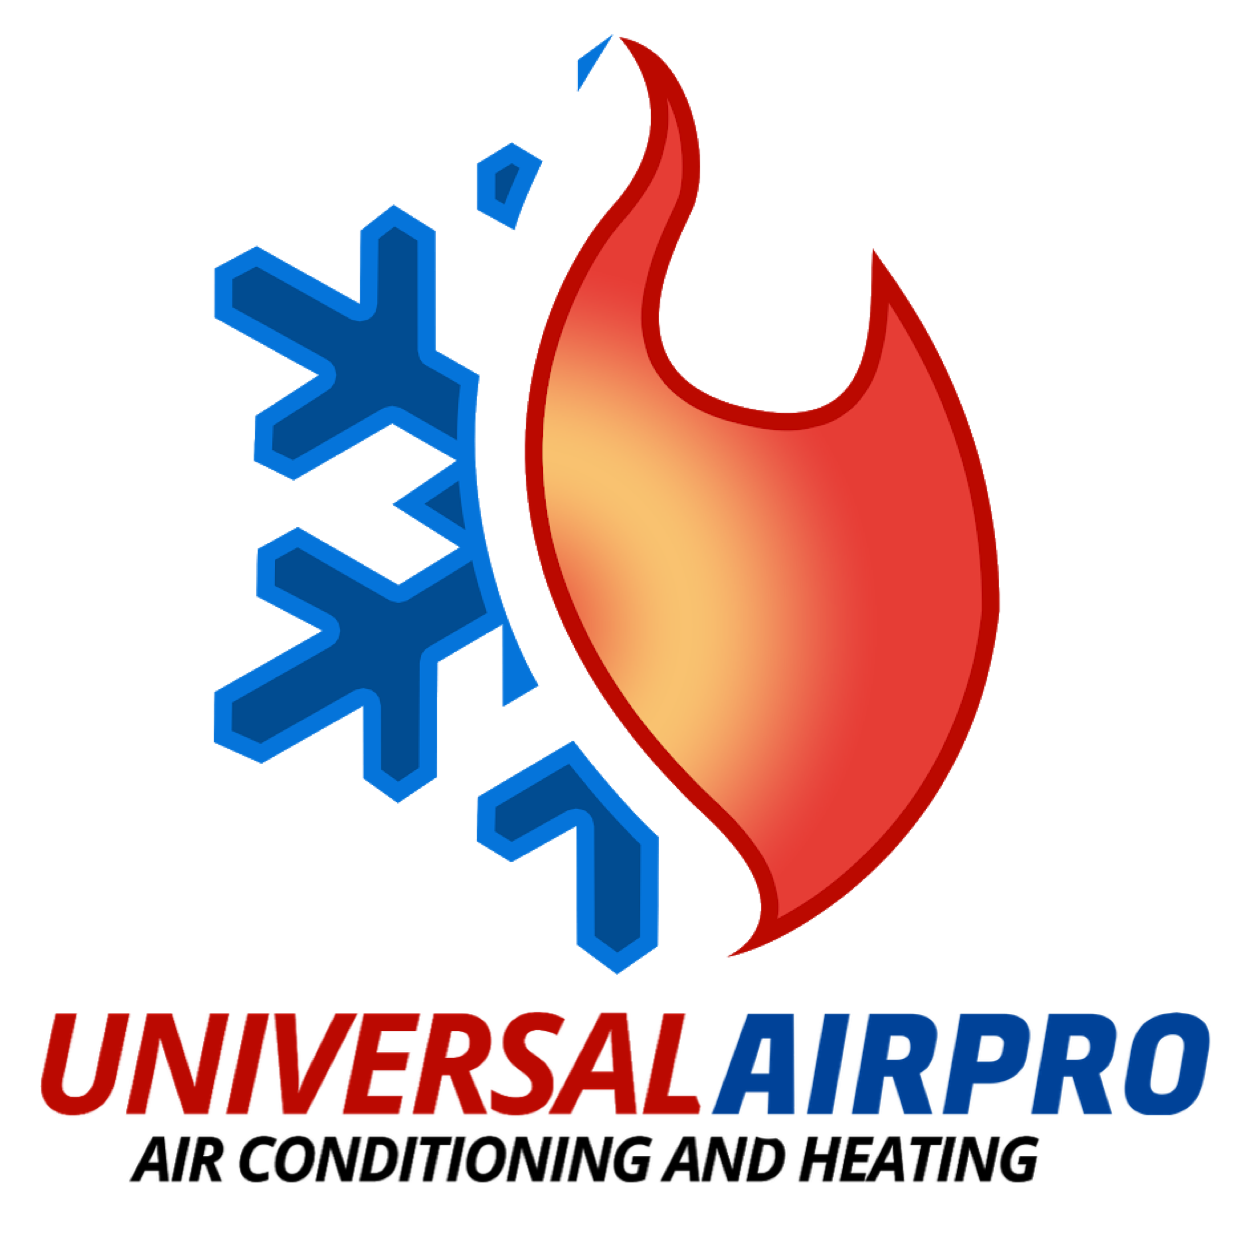 Universal Air Pro